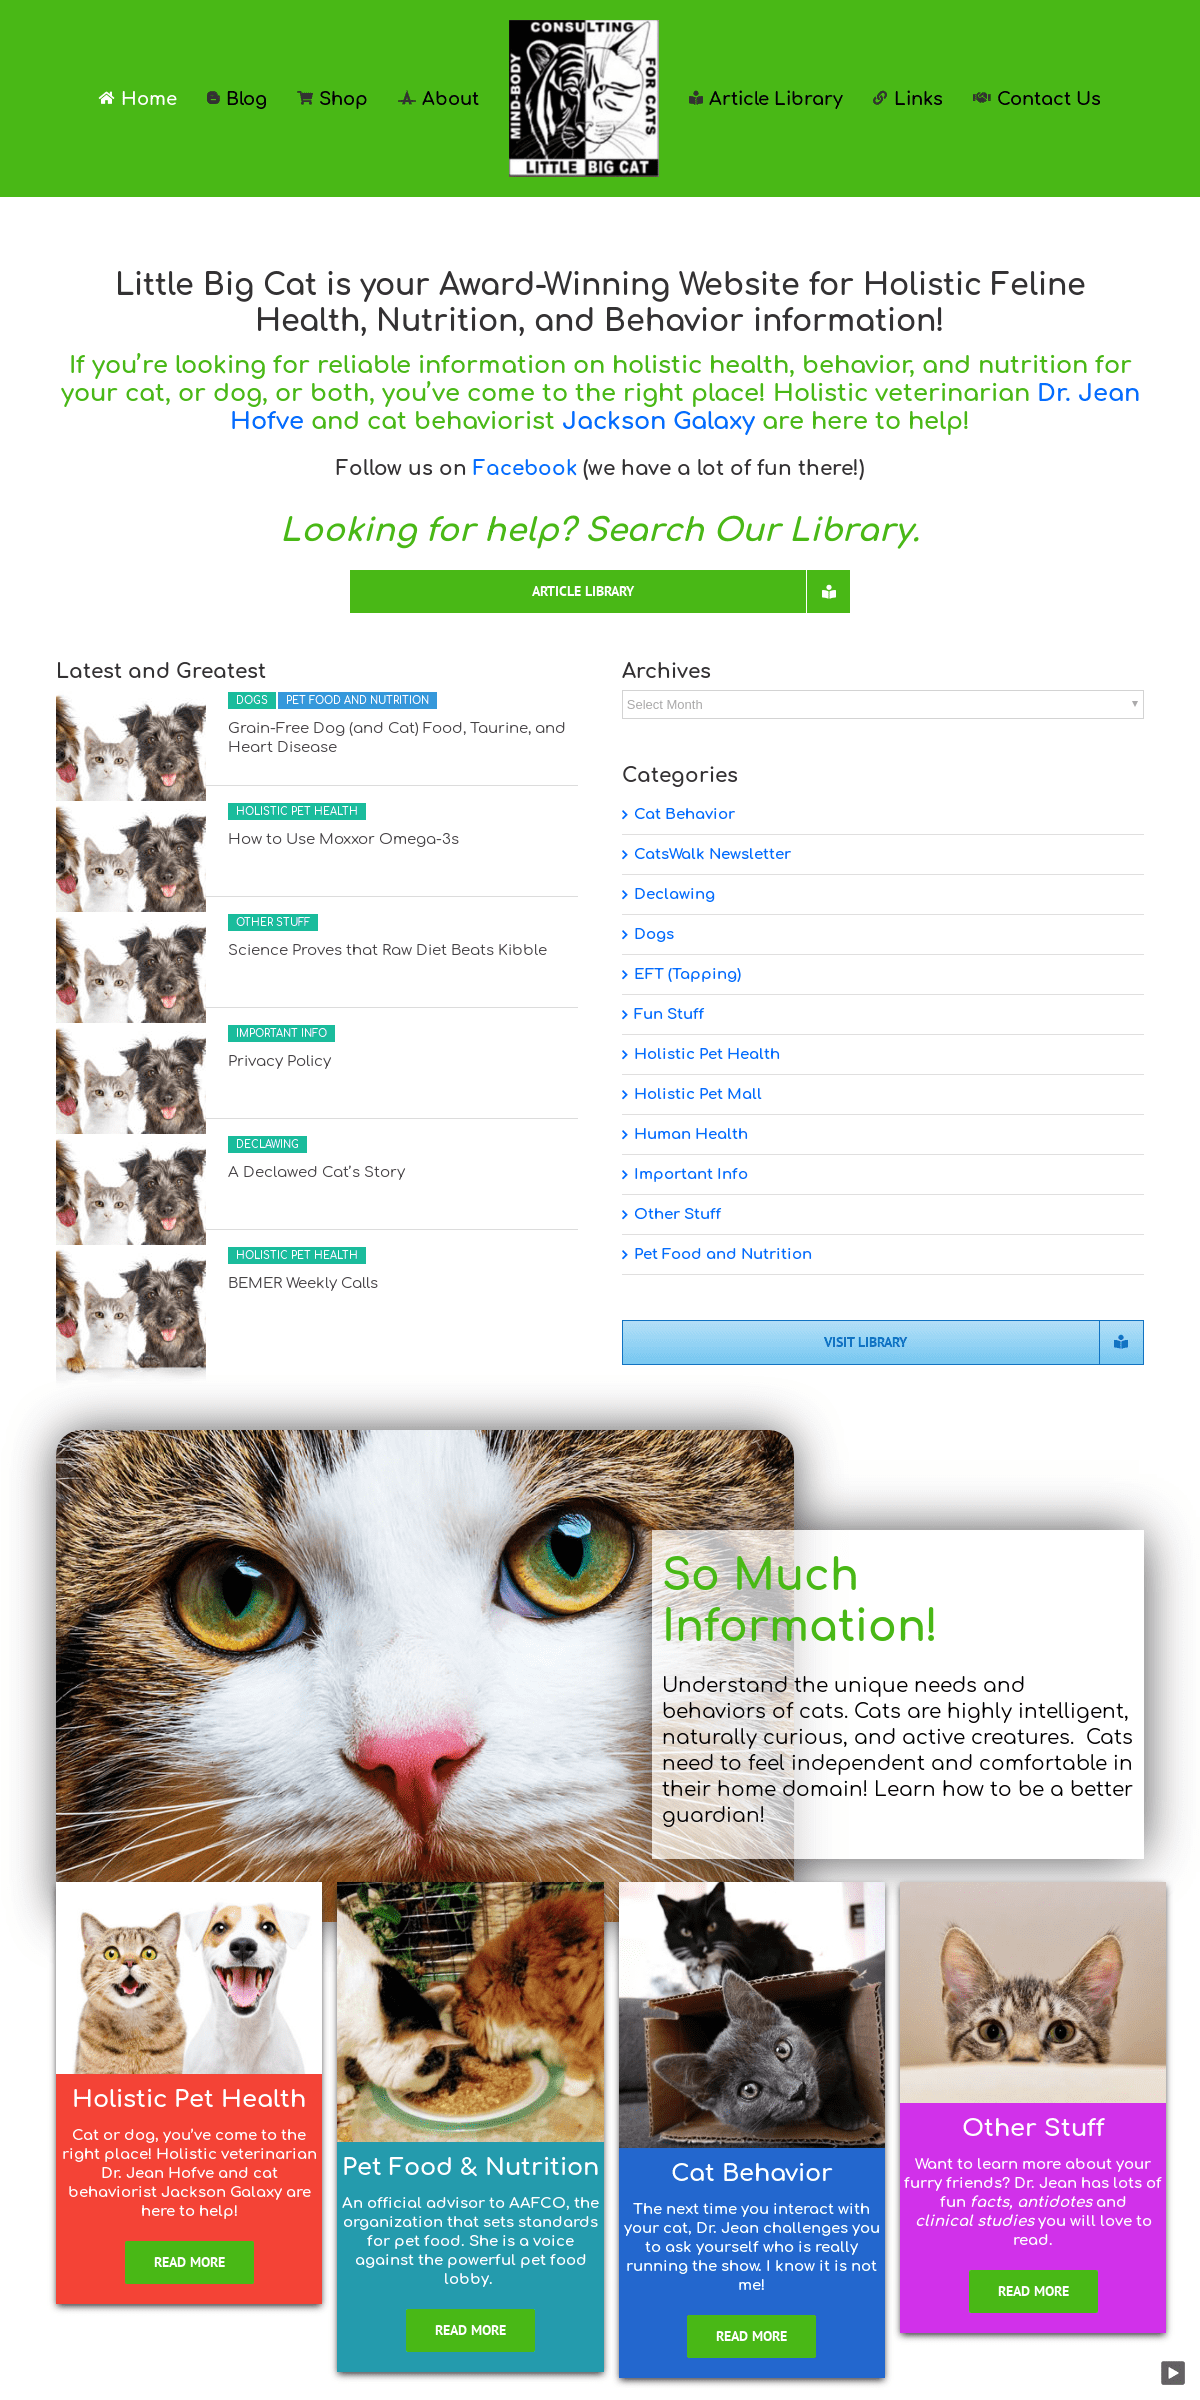 A complete backup of littlebigcat.com